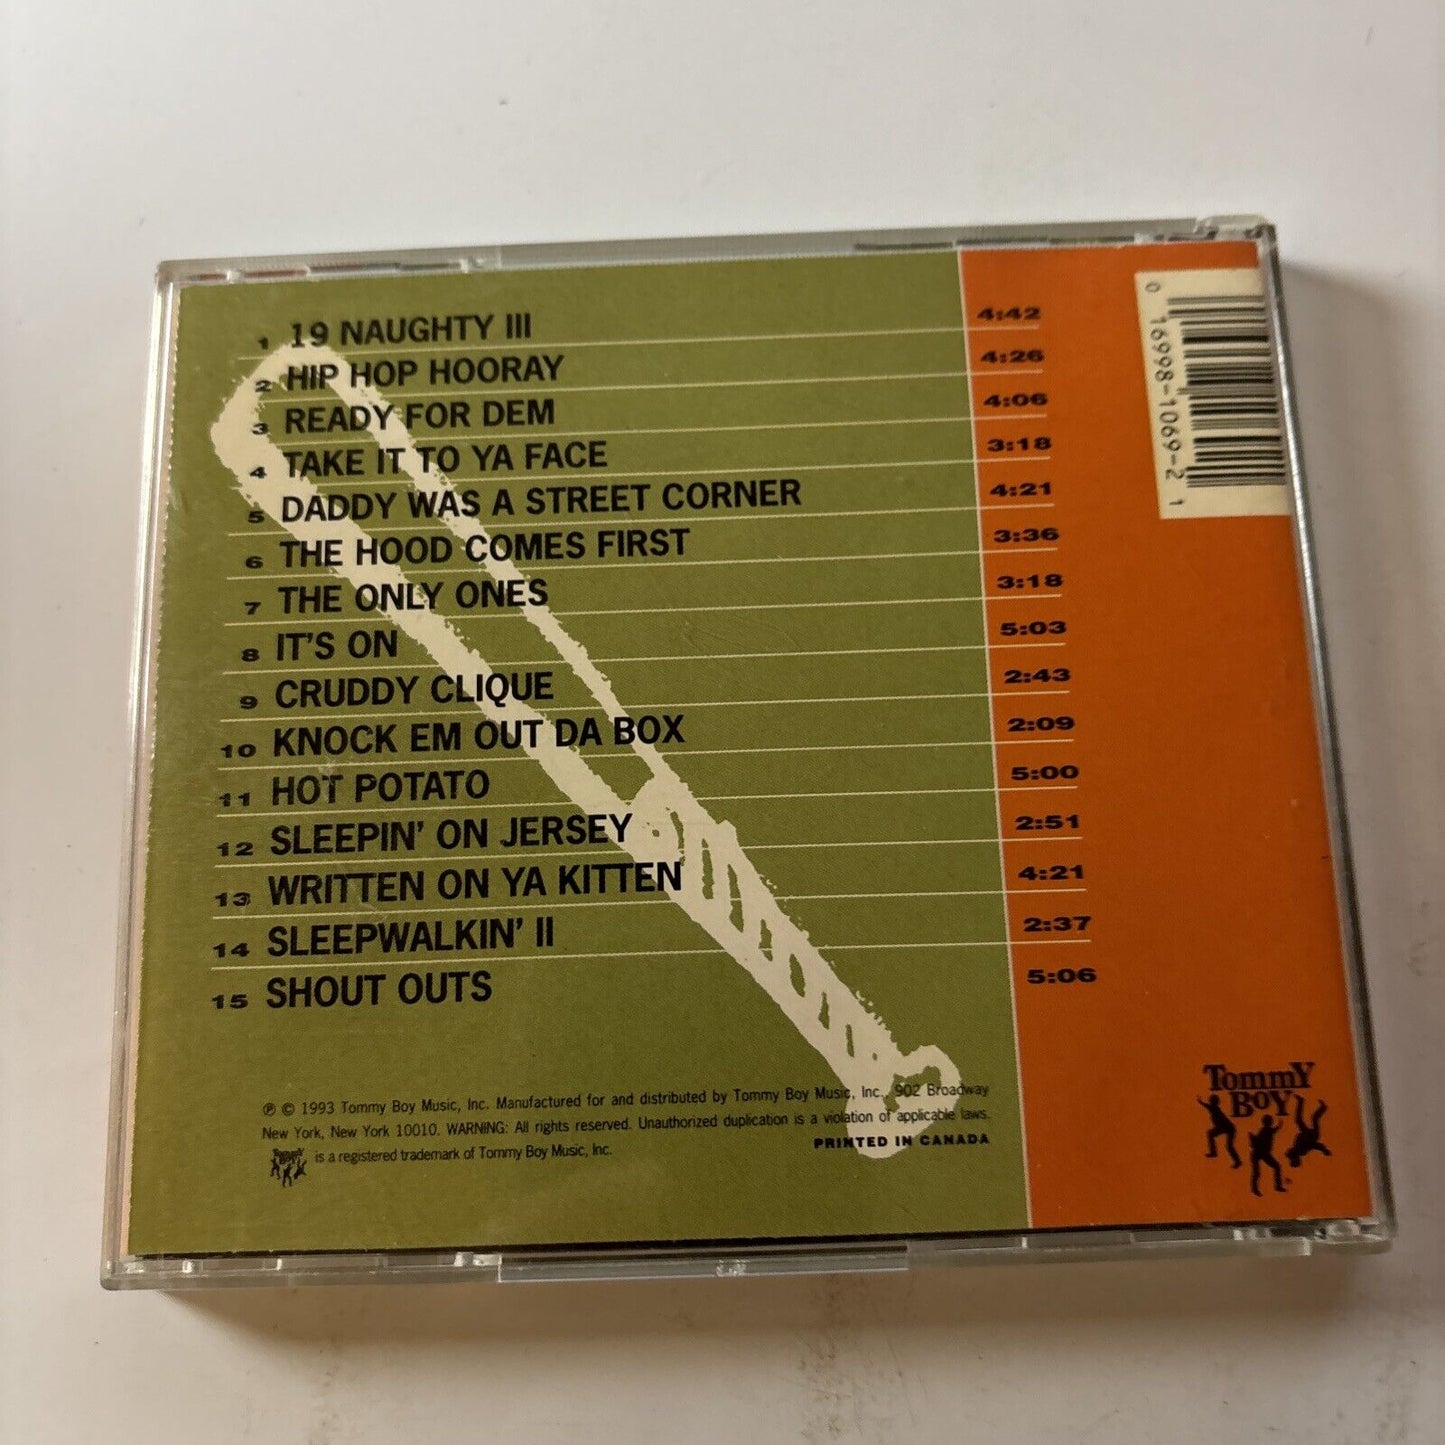 Naughty by Nature - 19 Naughty III (CD, 1993)